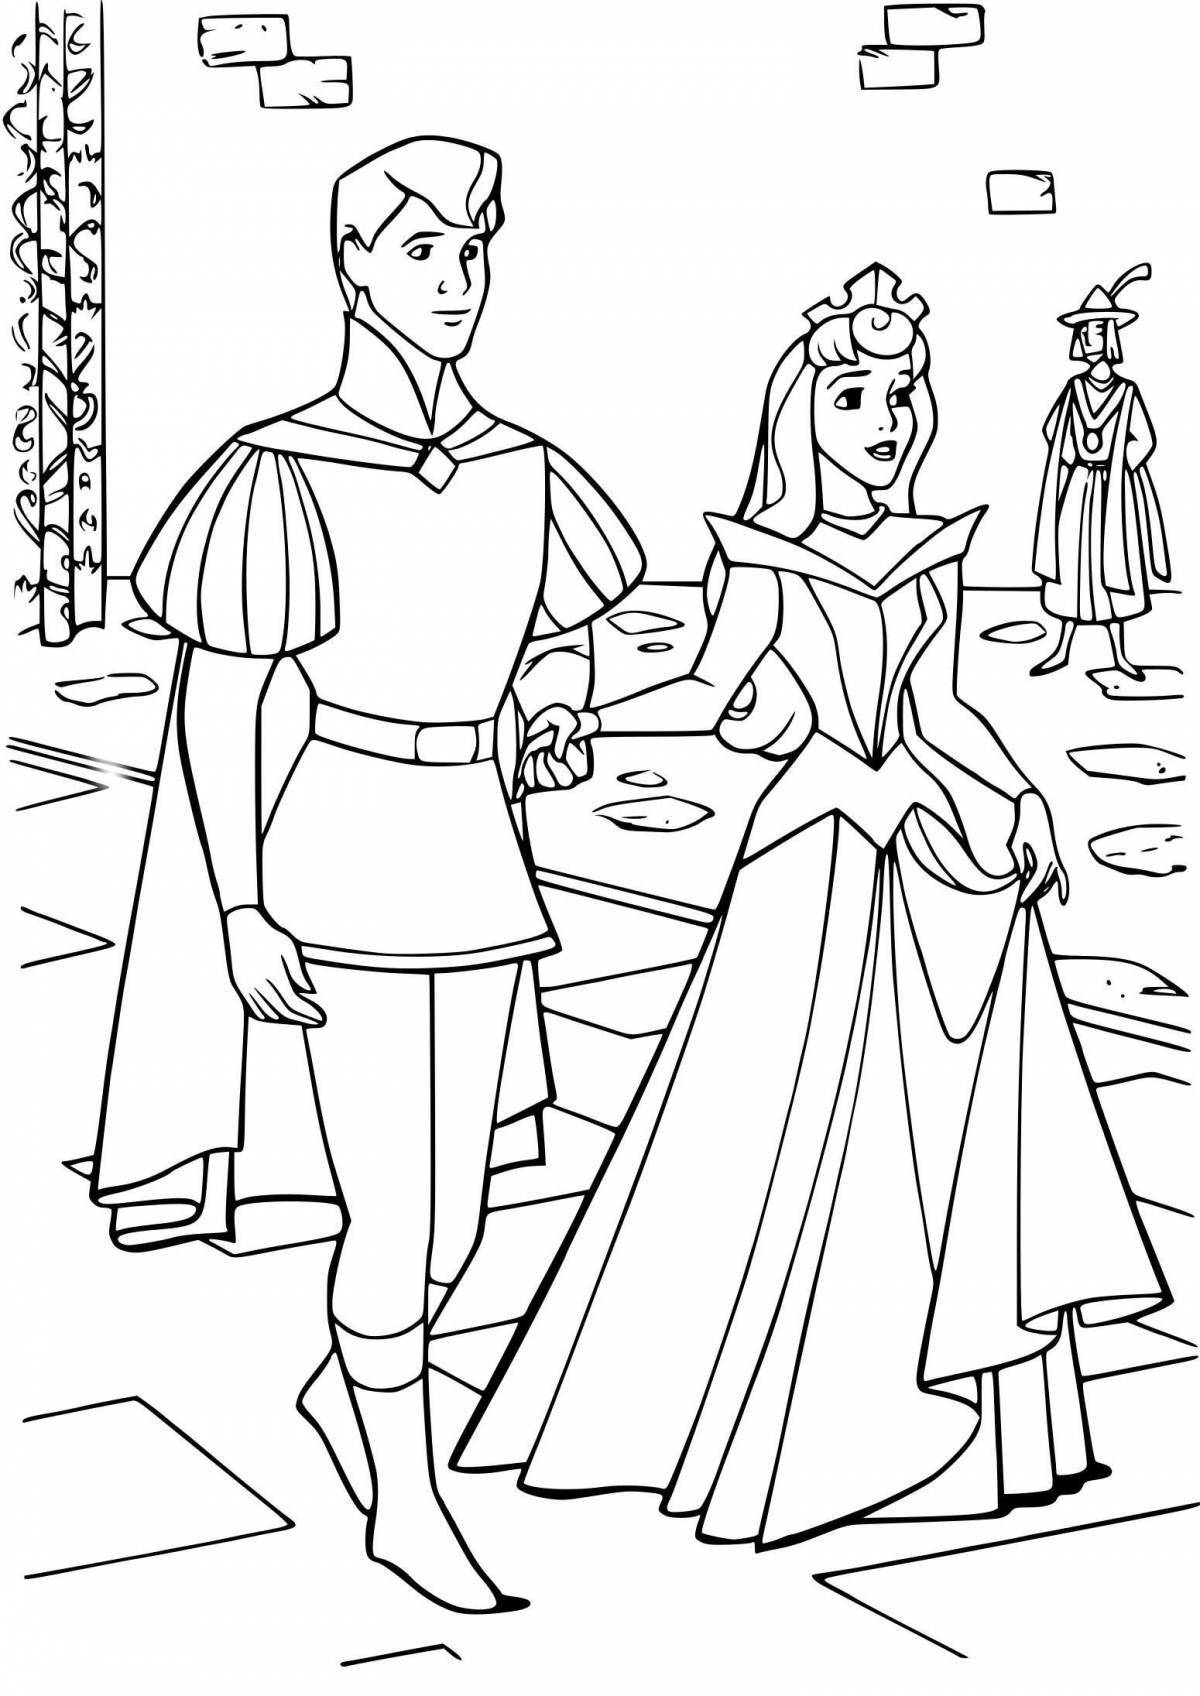 Living prince and princess coloring book